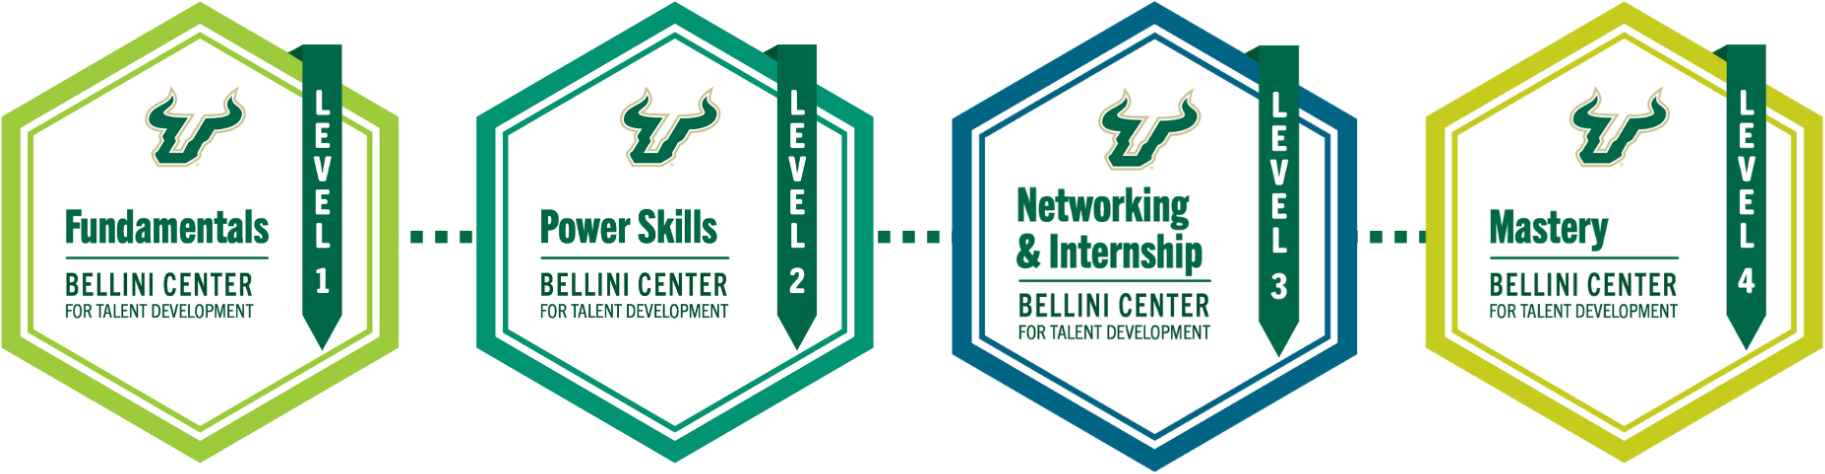 The Bellini Certification Program